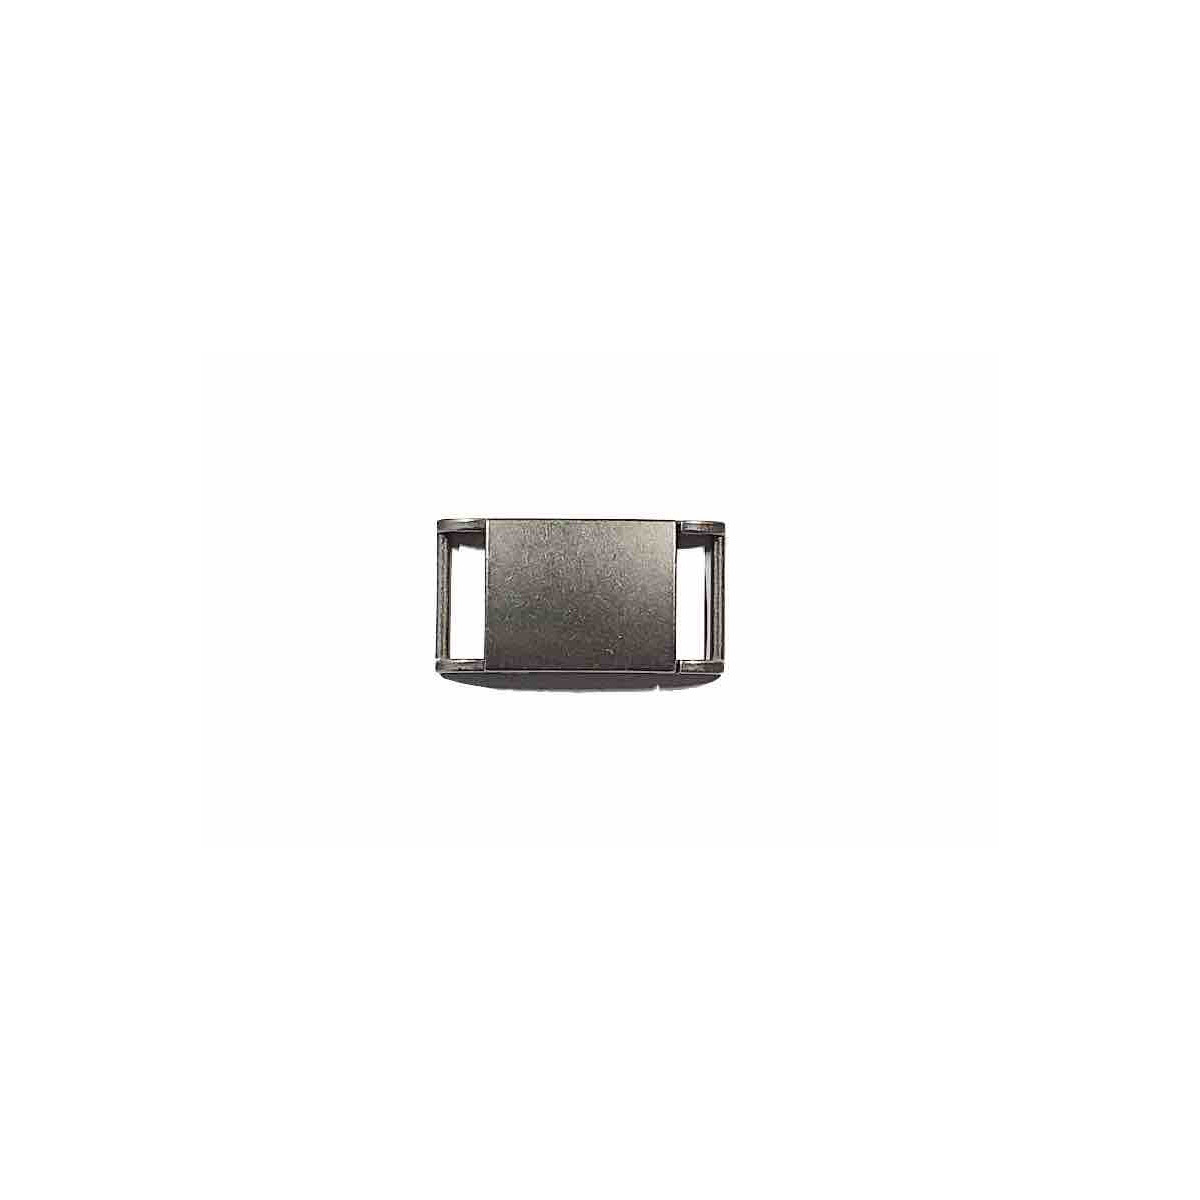 Bracelet en Cuir marron avec fermoir bouton en acier inoxydable réglable en  2 tailles